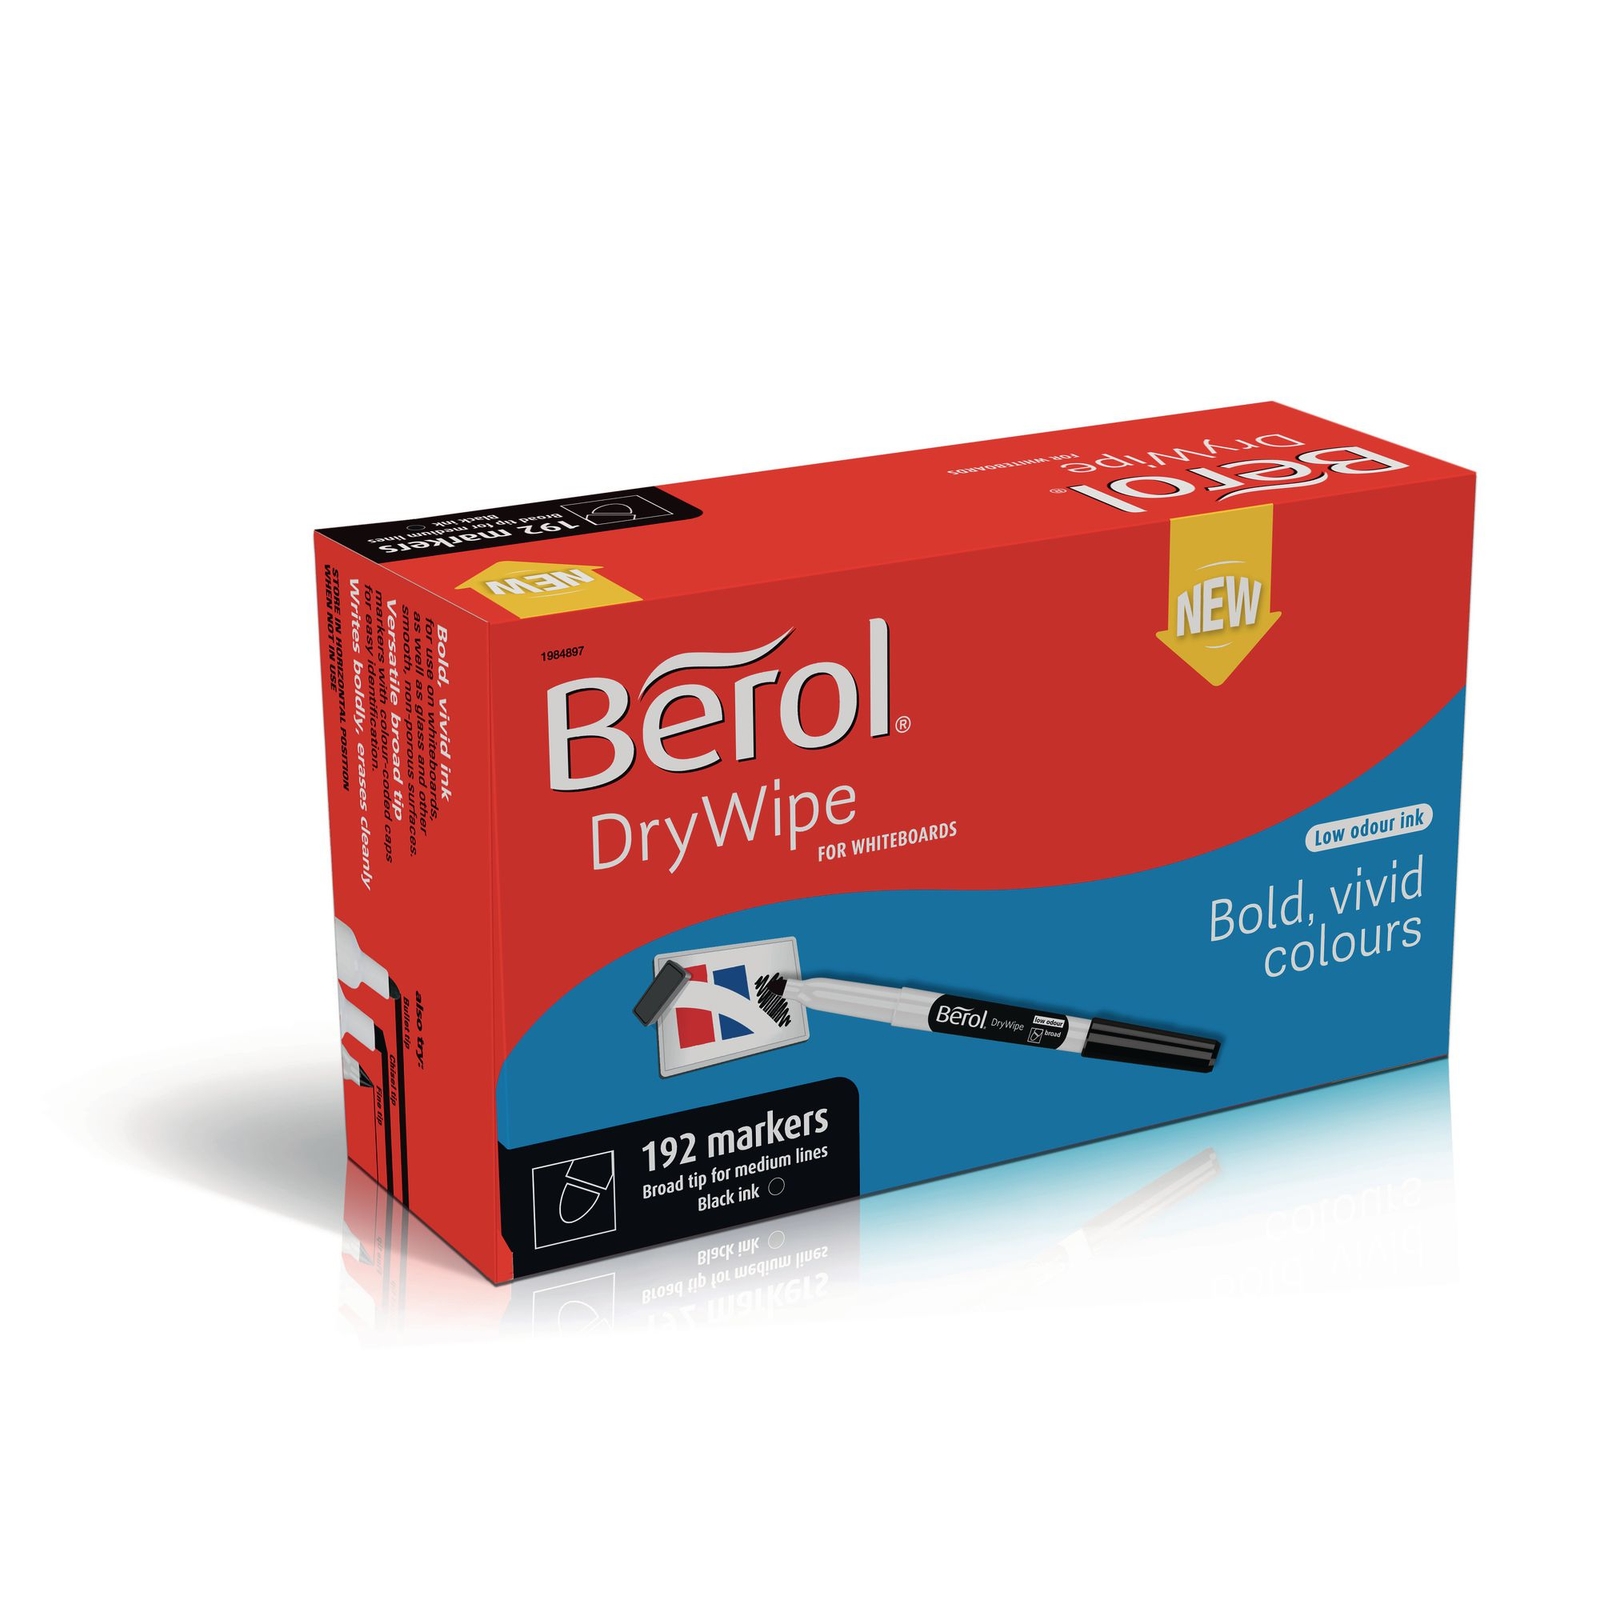 Berol Whiteboard Bullet Tip Marker Pens - Black - Pack of 192